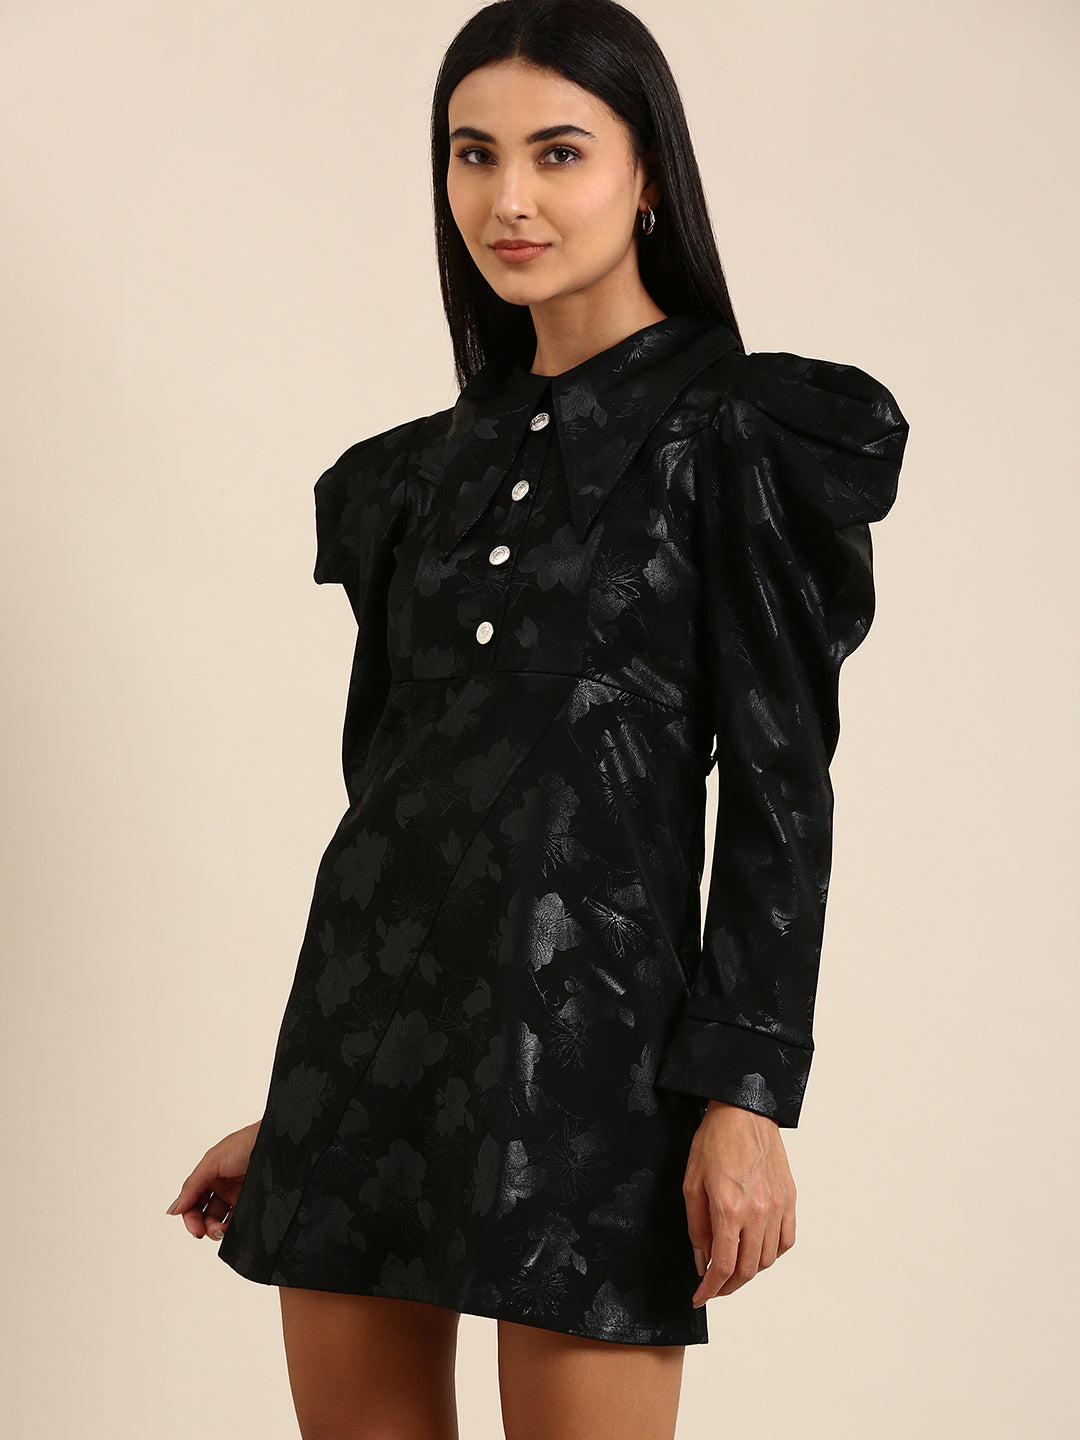 Athena Black Floral A-Line Dress - Athena Lifestyle